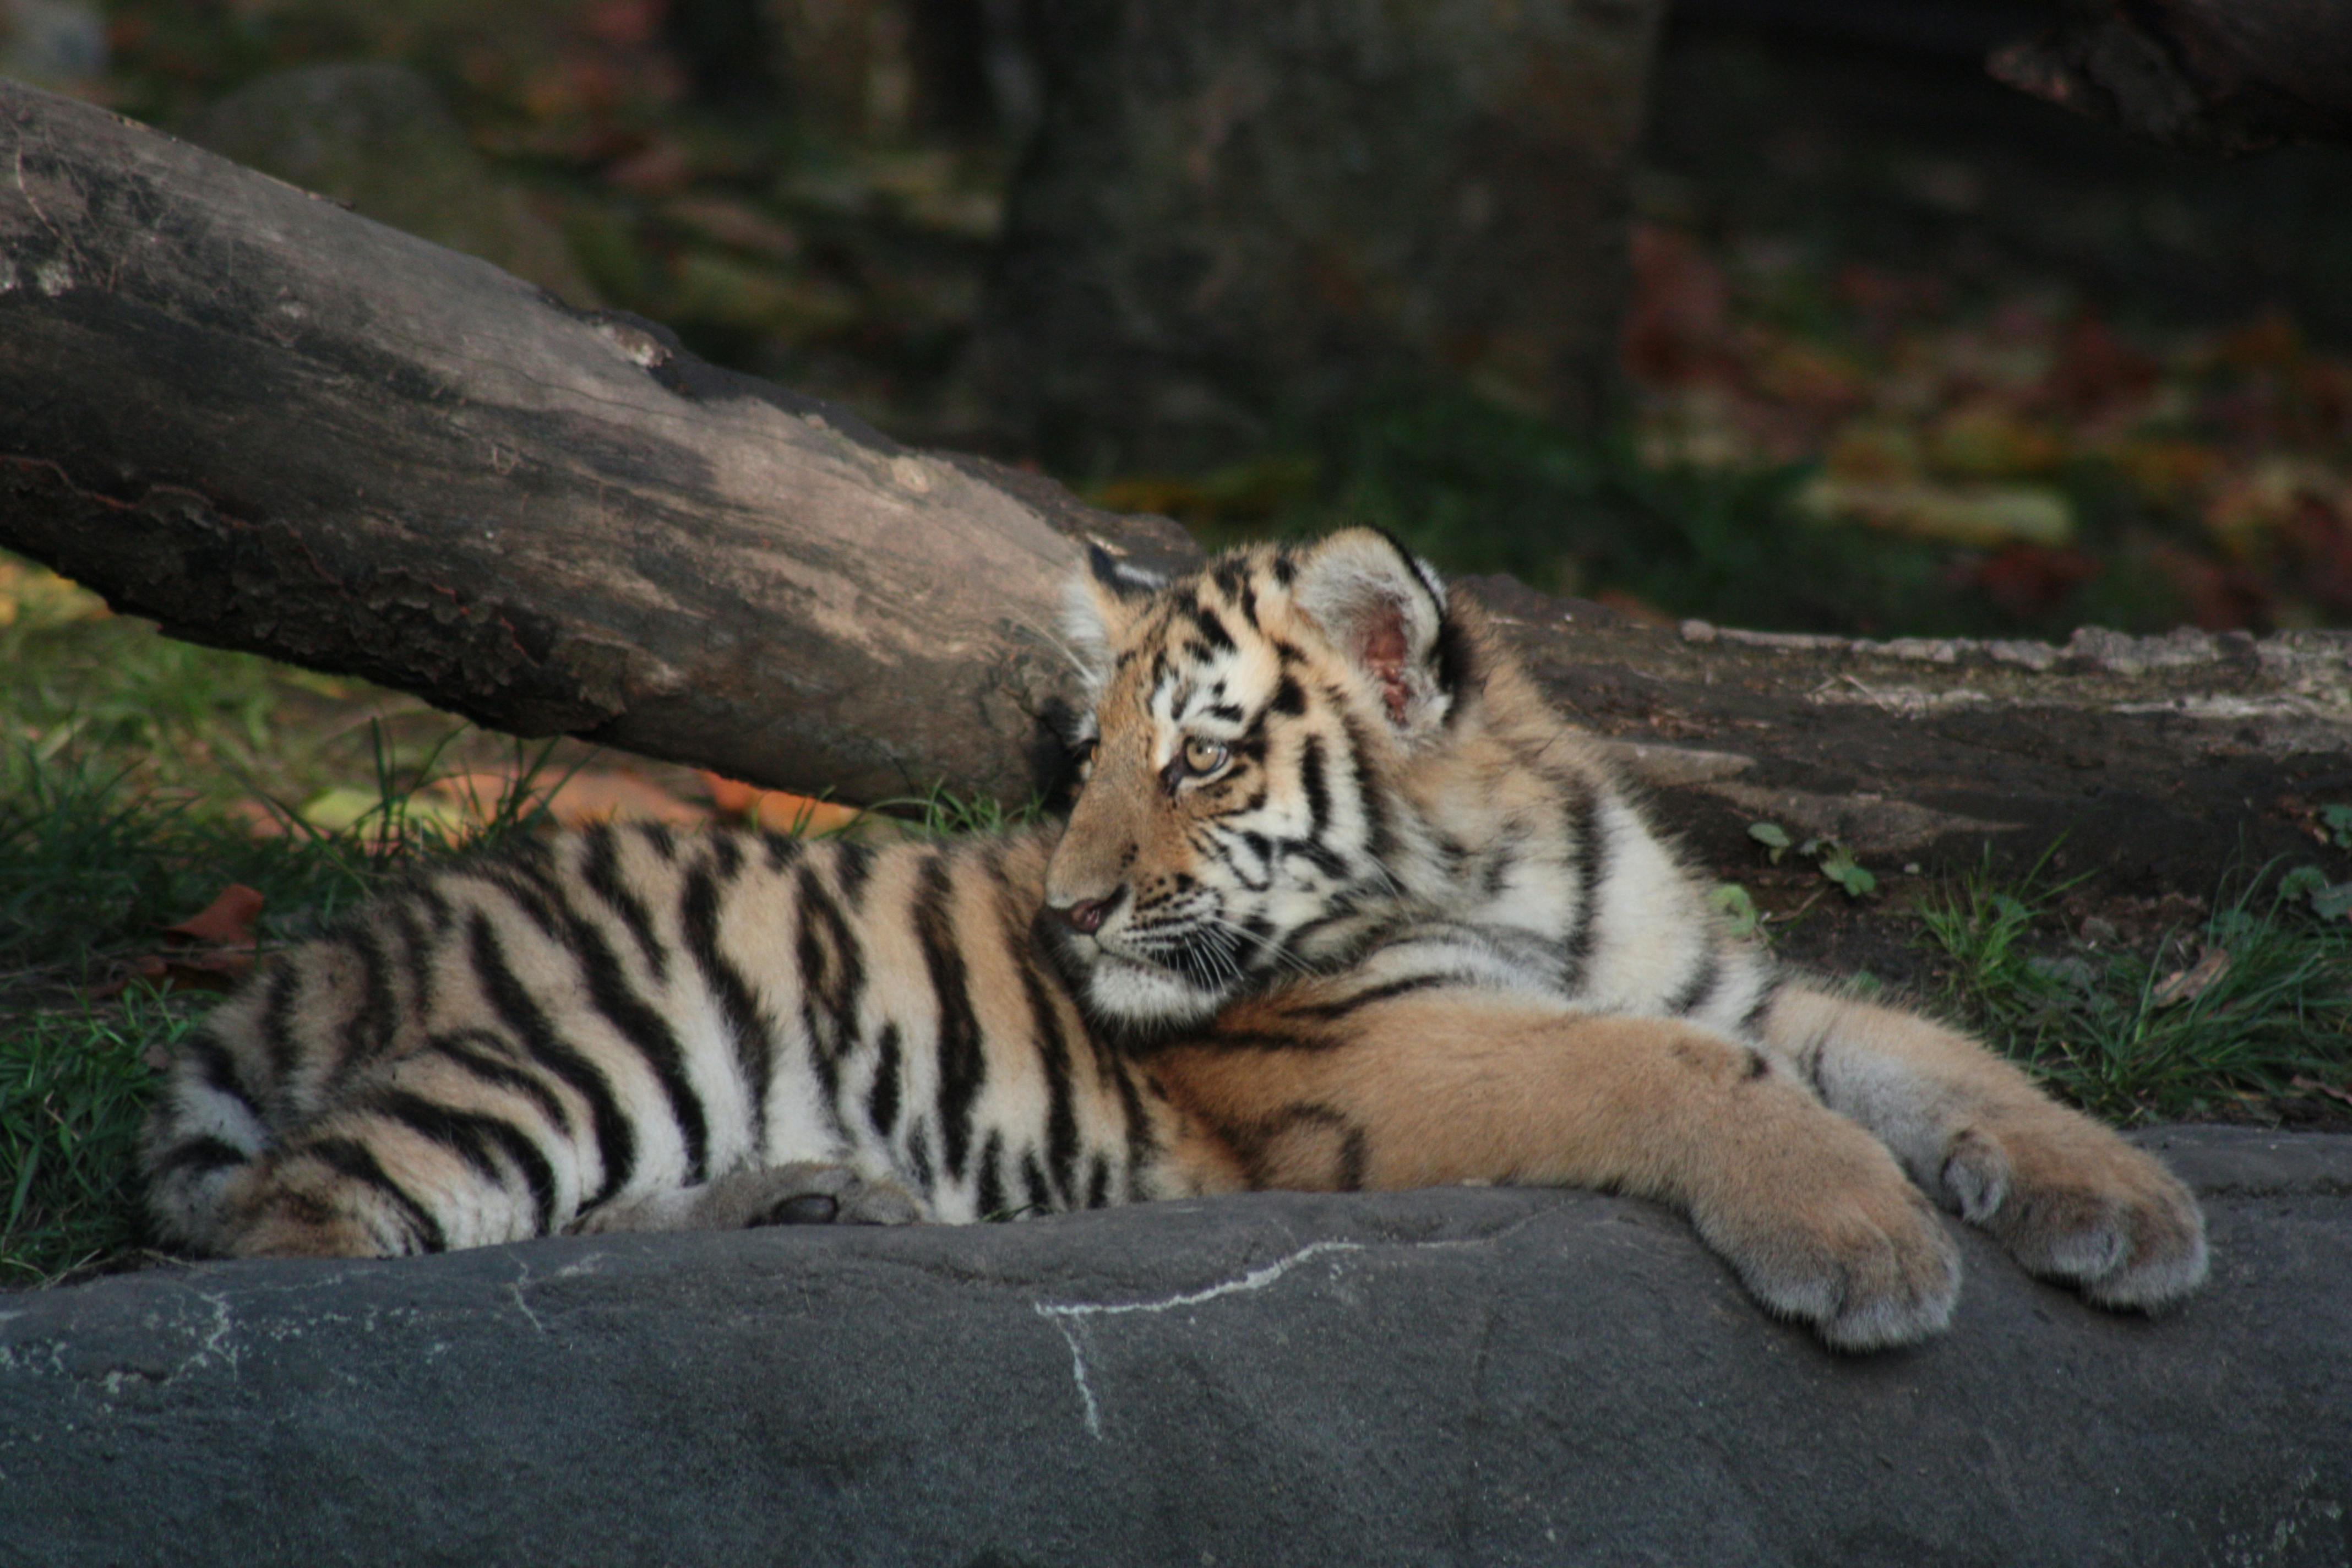 500+ Tiger Cub Pictures  Download Free Images on Unsplash